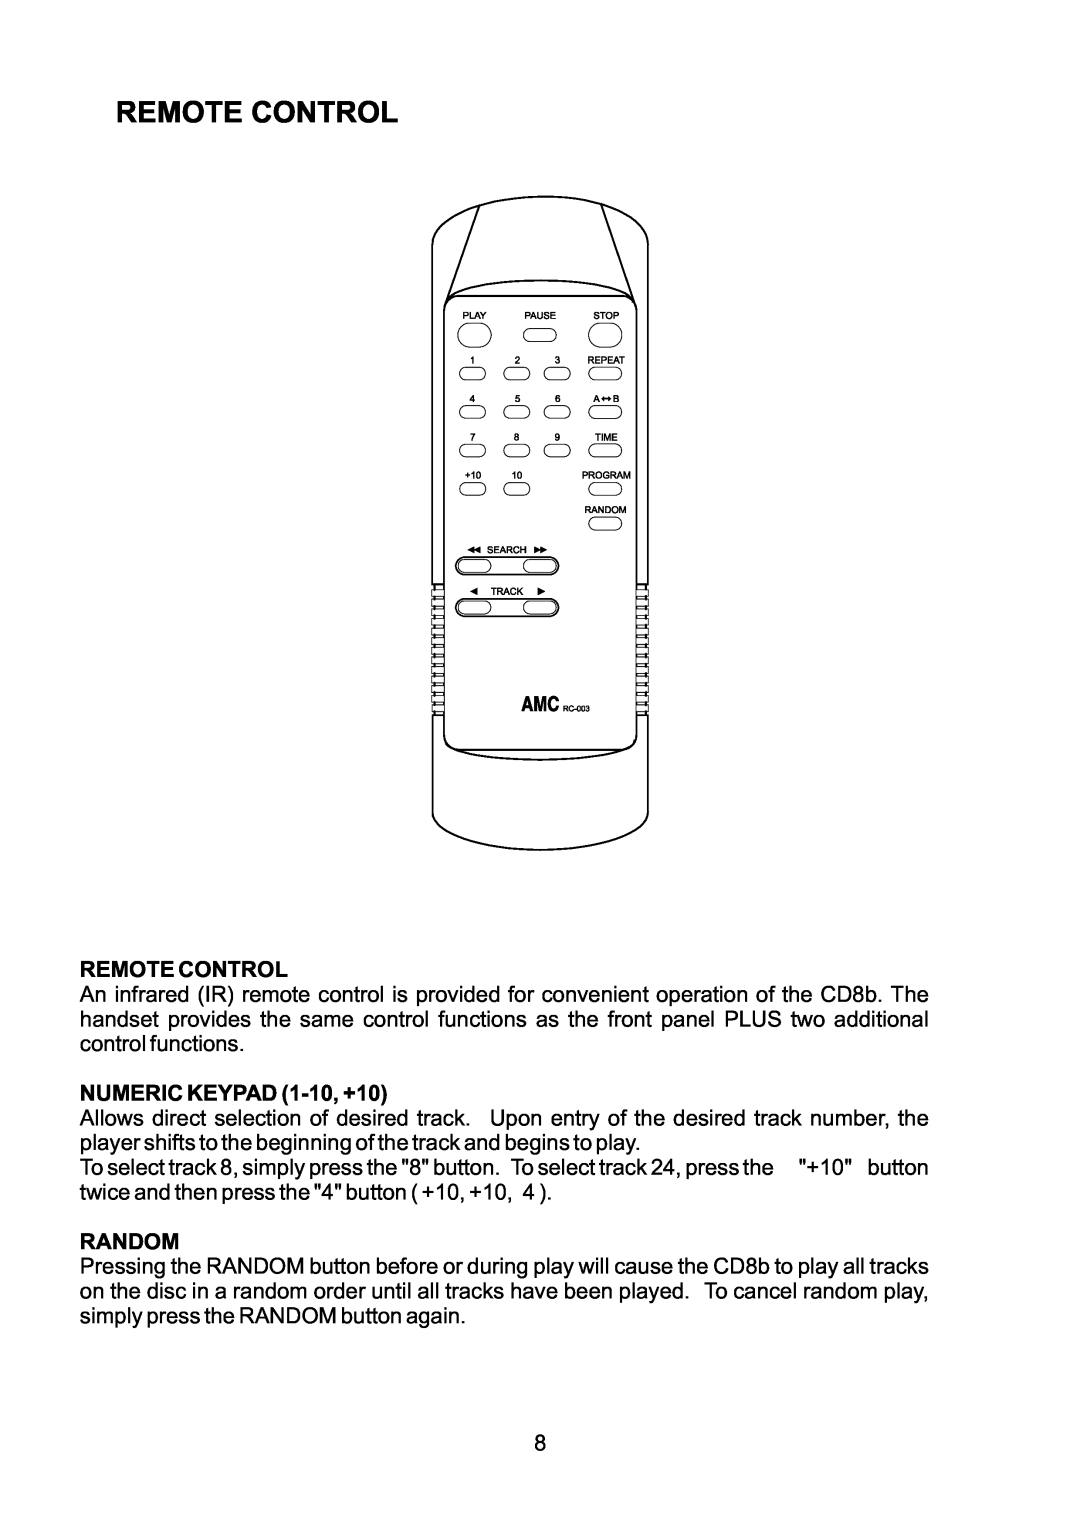 AMC CD8b manual Remote Control, NUMERIC KEYPAD 1-10,+10, Random 